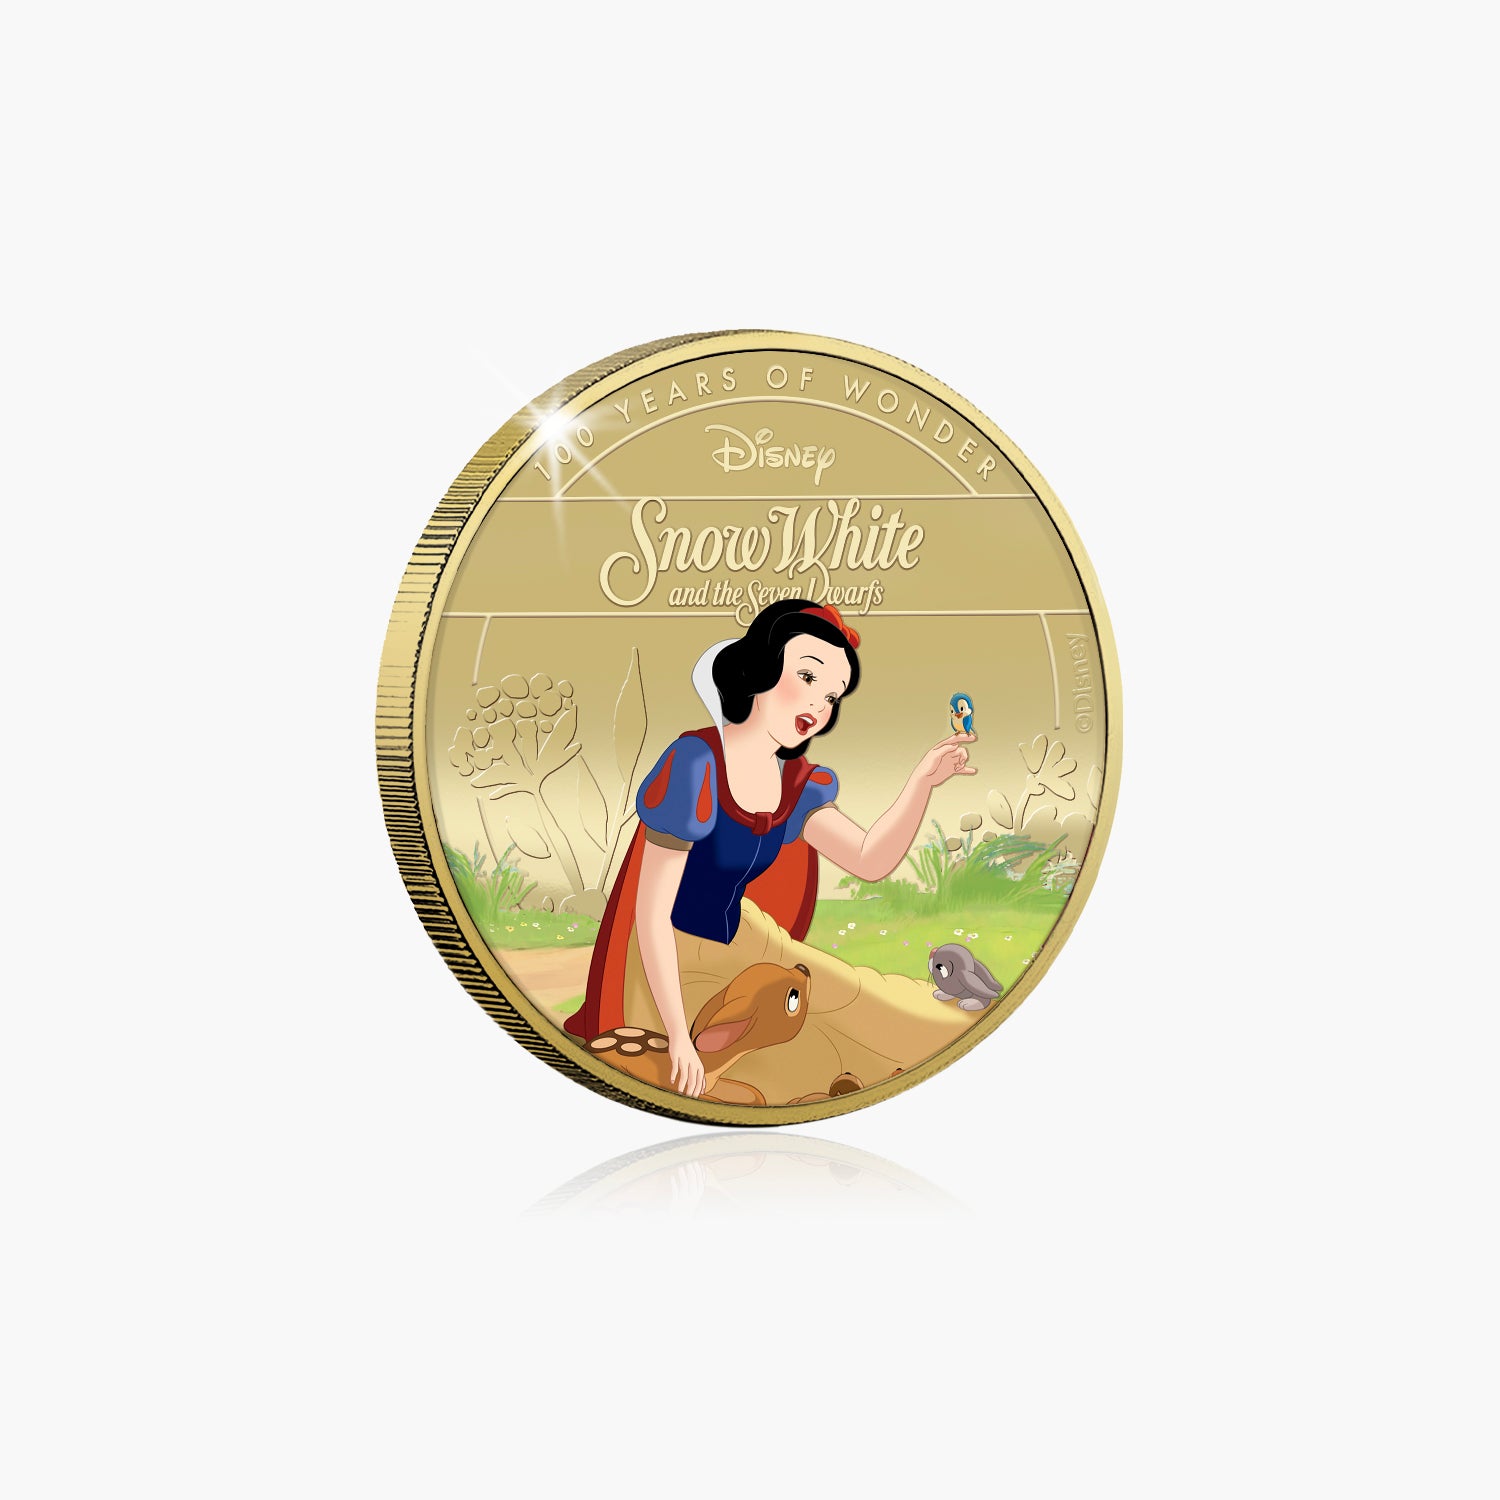 D100 Disney Snow White Gold Plated Commemorative